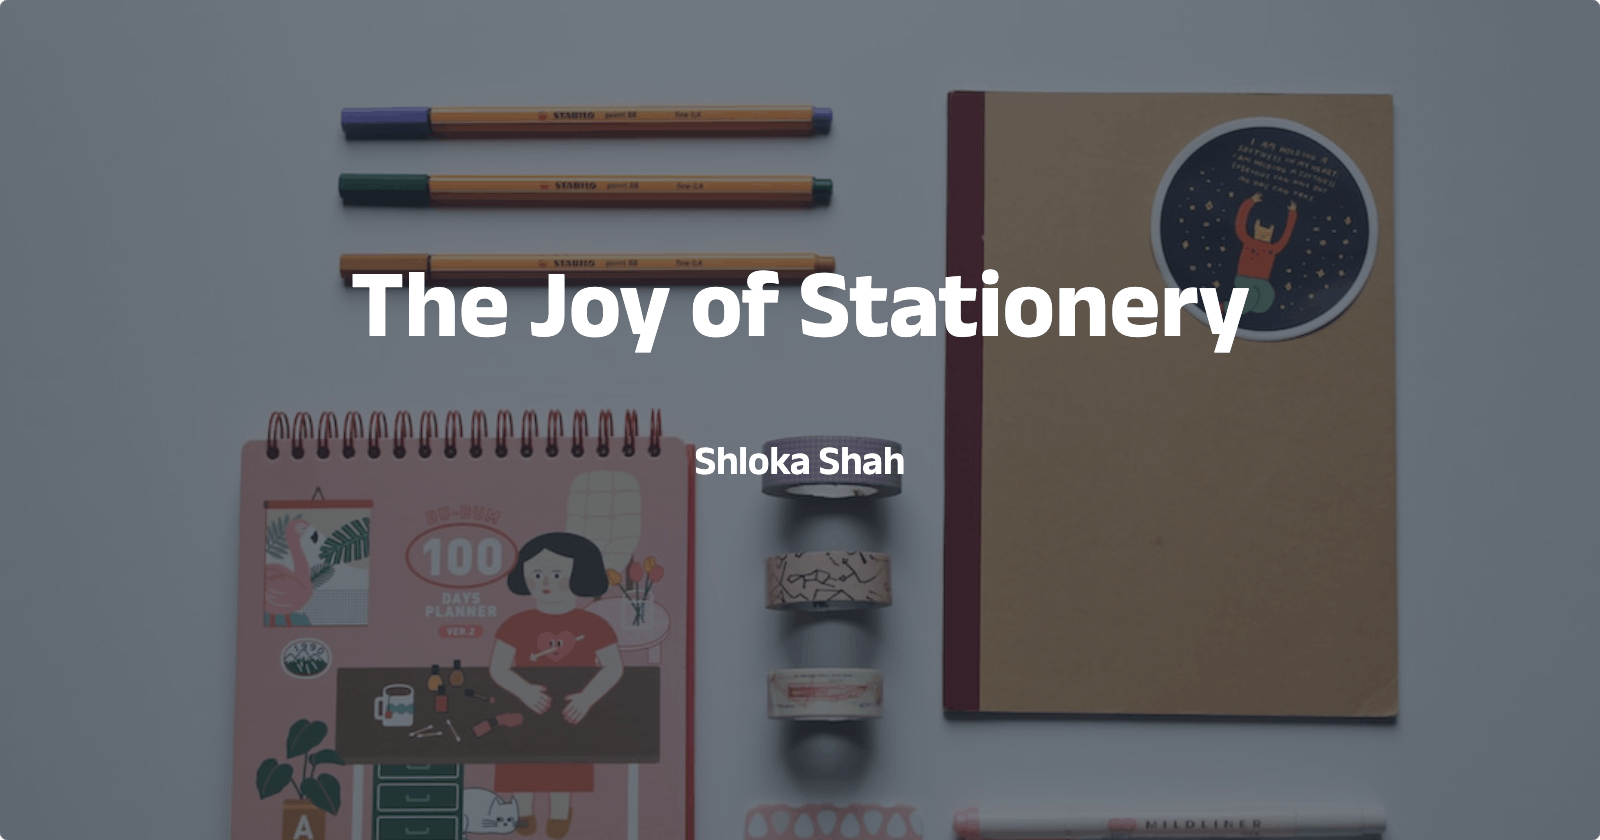 The Joy of Stationery